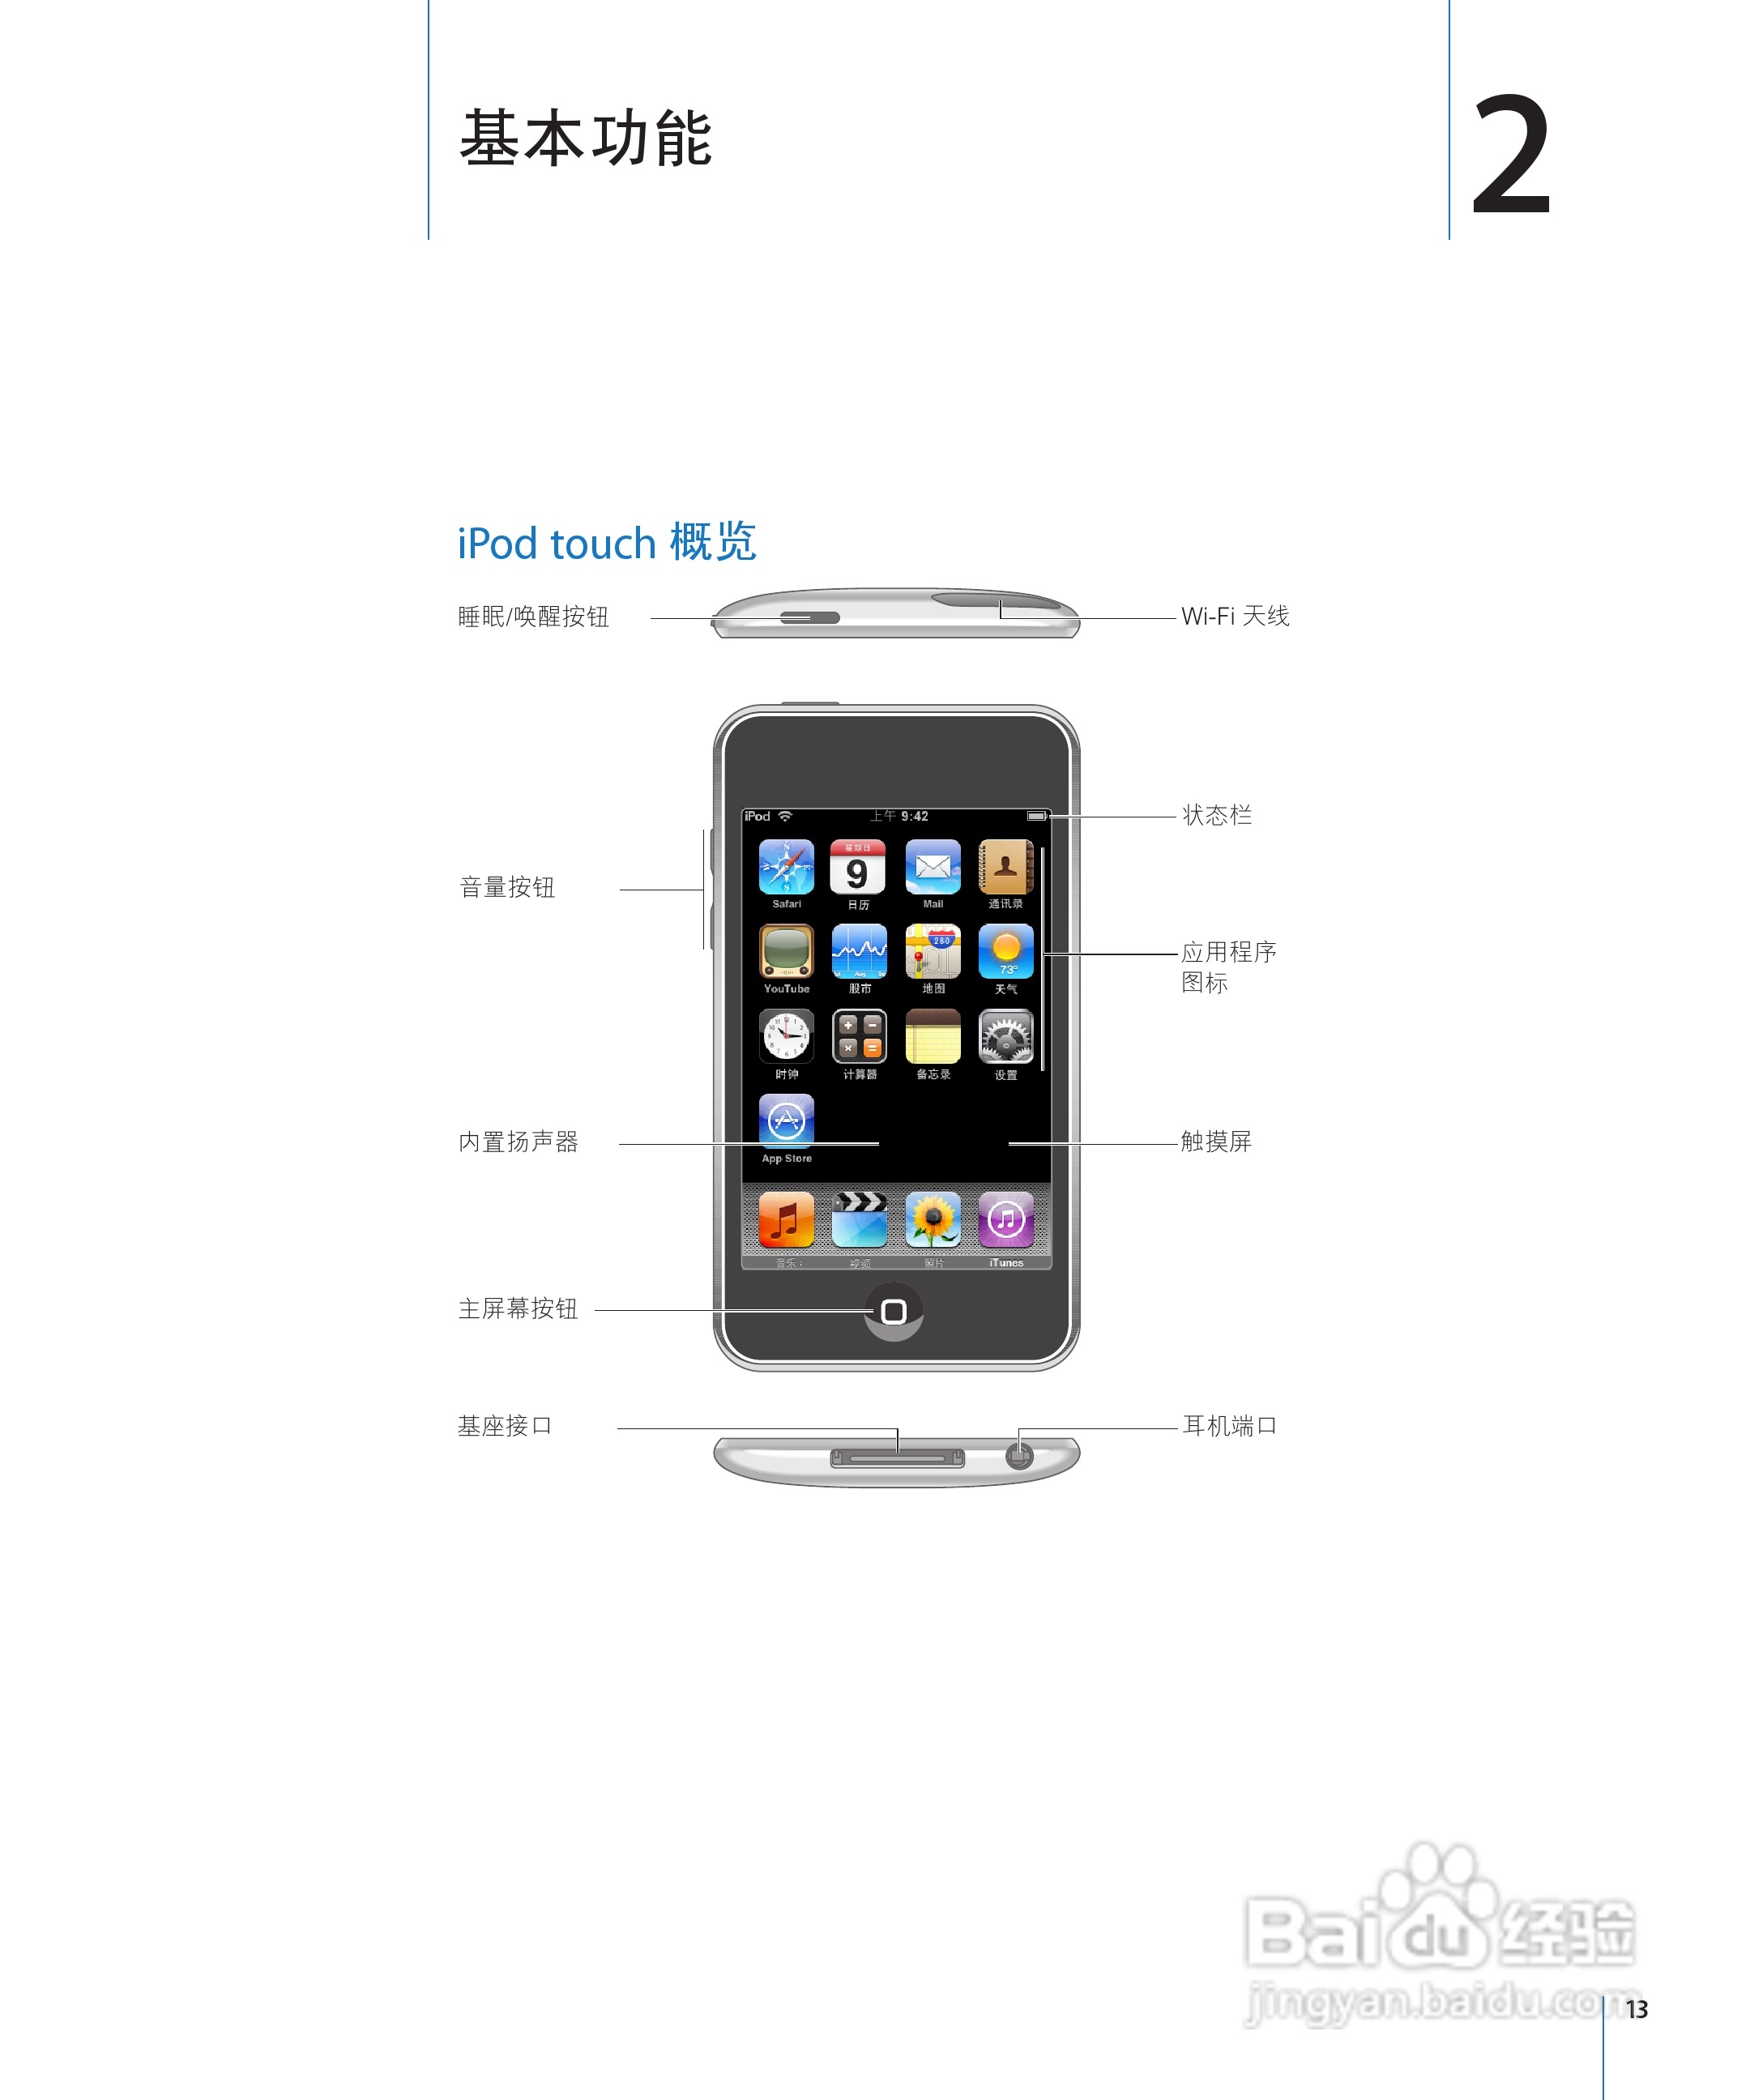 apple苹果ipod touch 22(简体中文)手机说明书:[2]